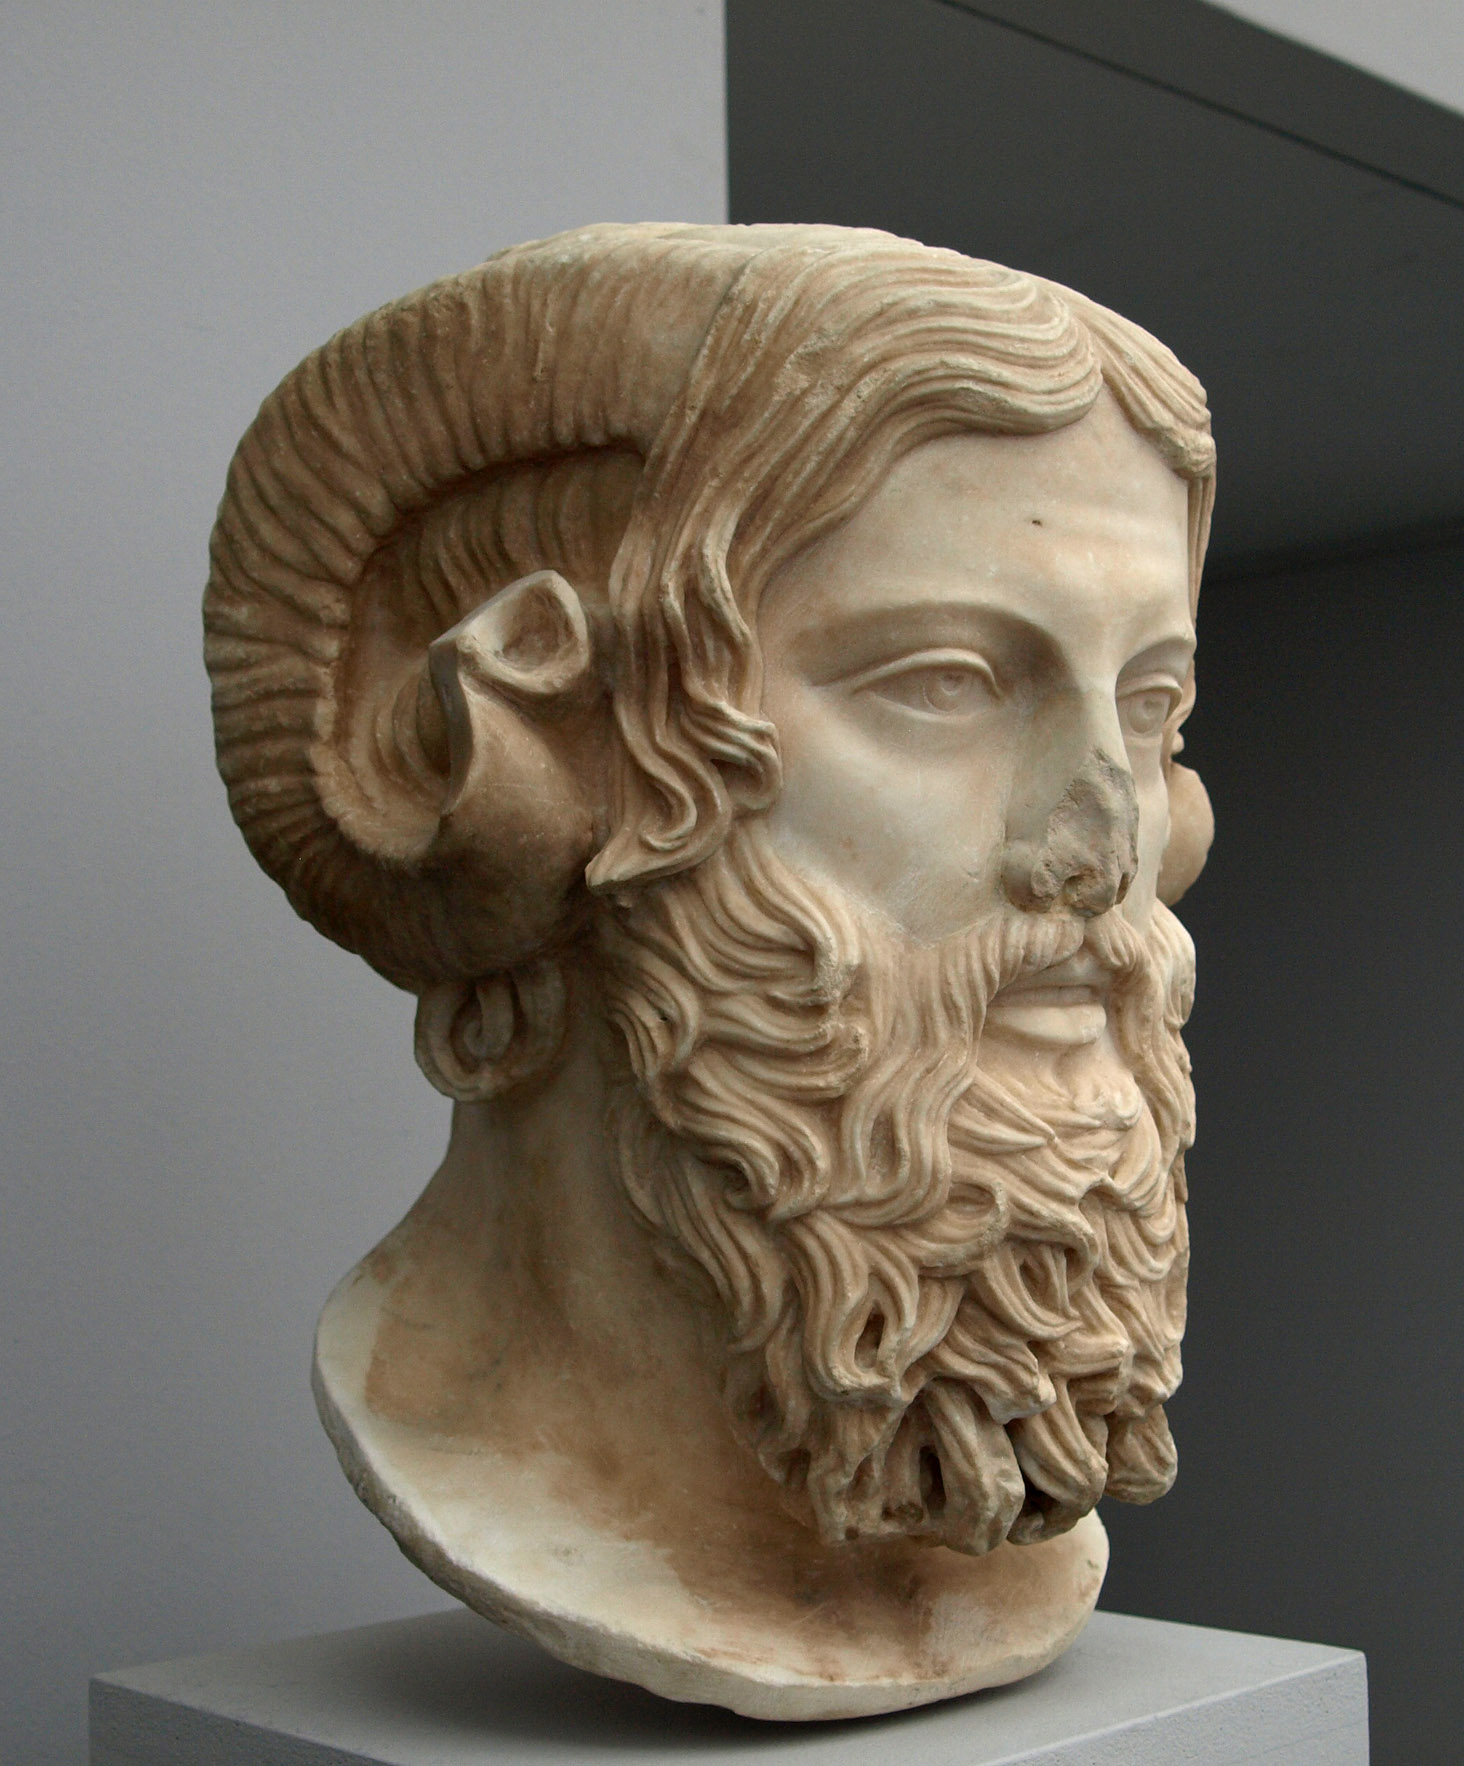 The head of a statue of Zeus Ammon, a bearded man with culred ram's horns.